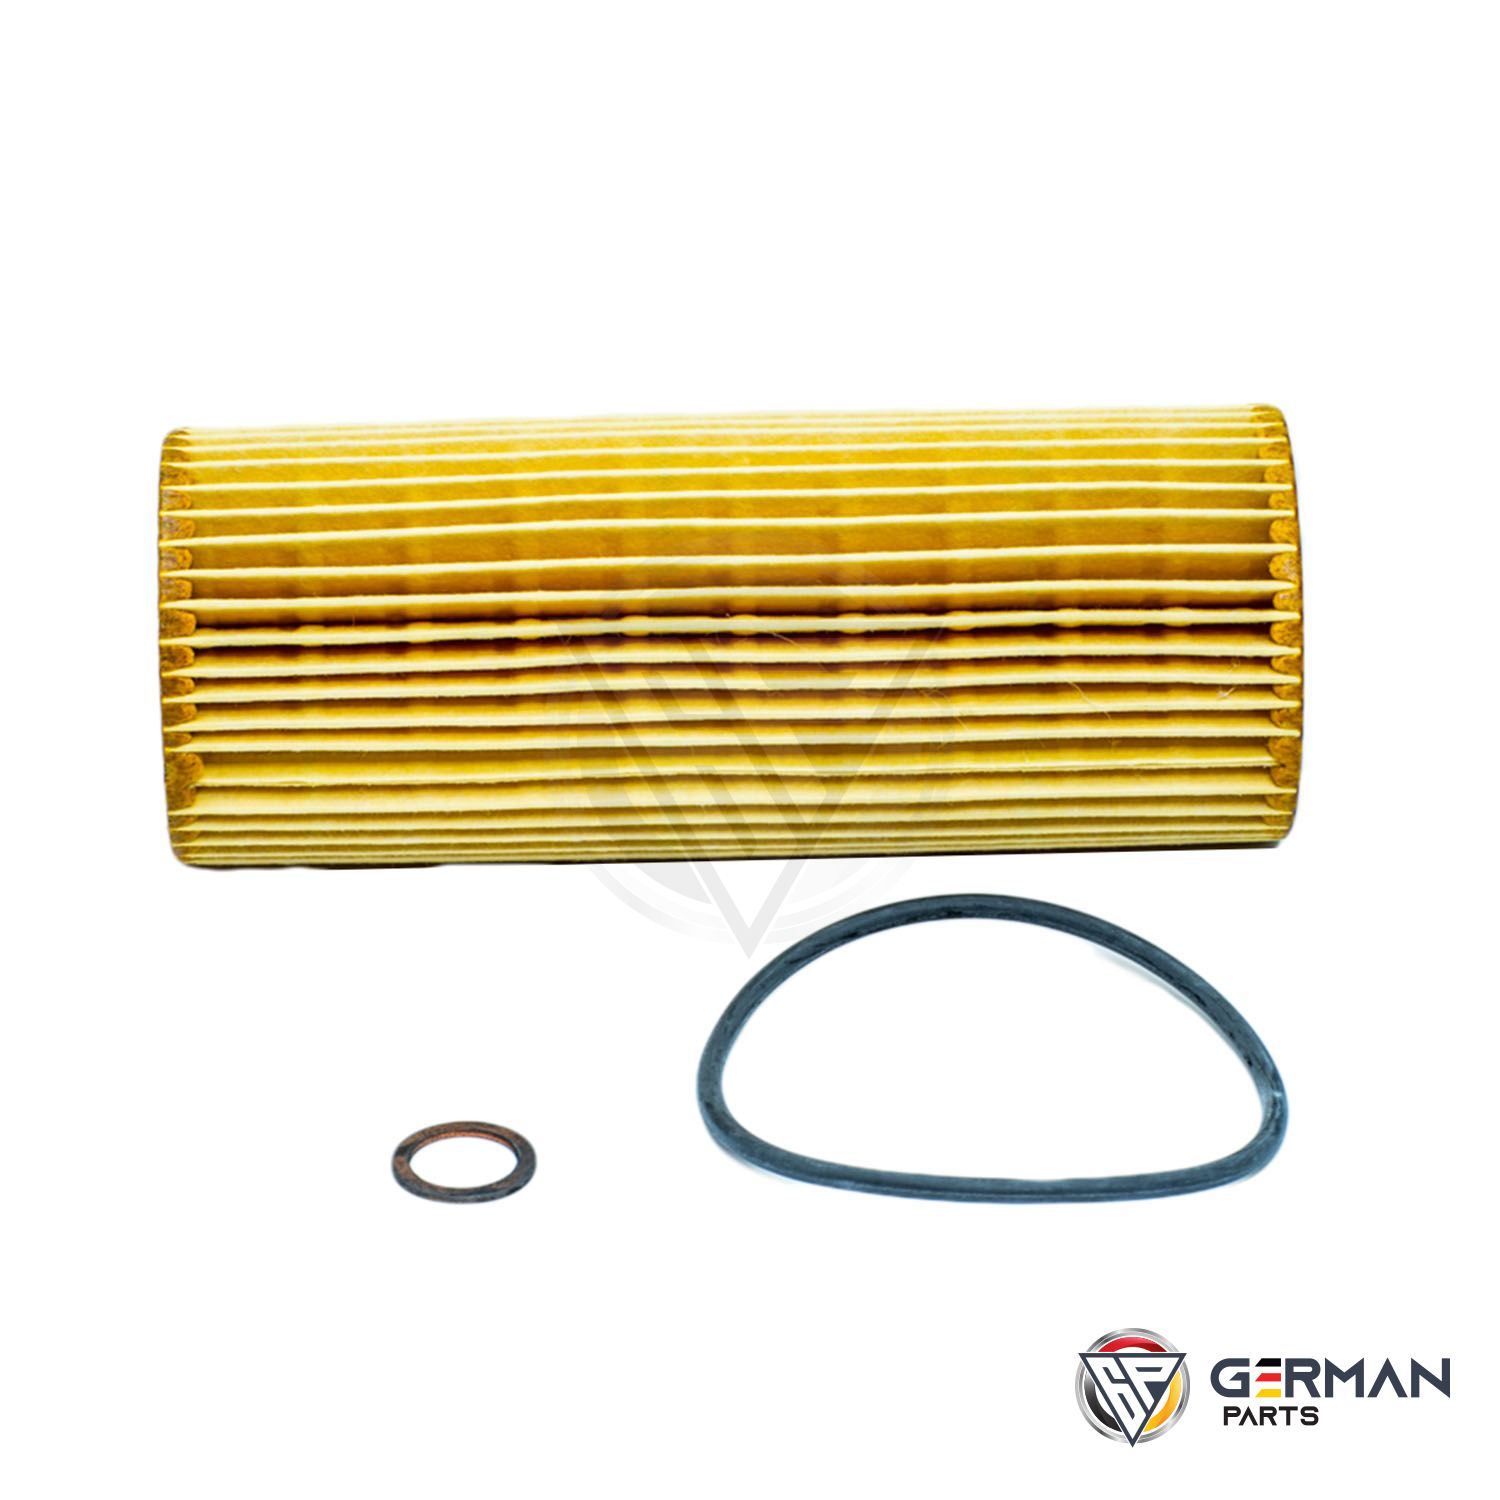 Buy Bosch Oil Filter 1041800109 - German Parts